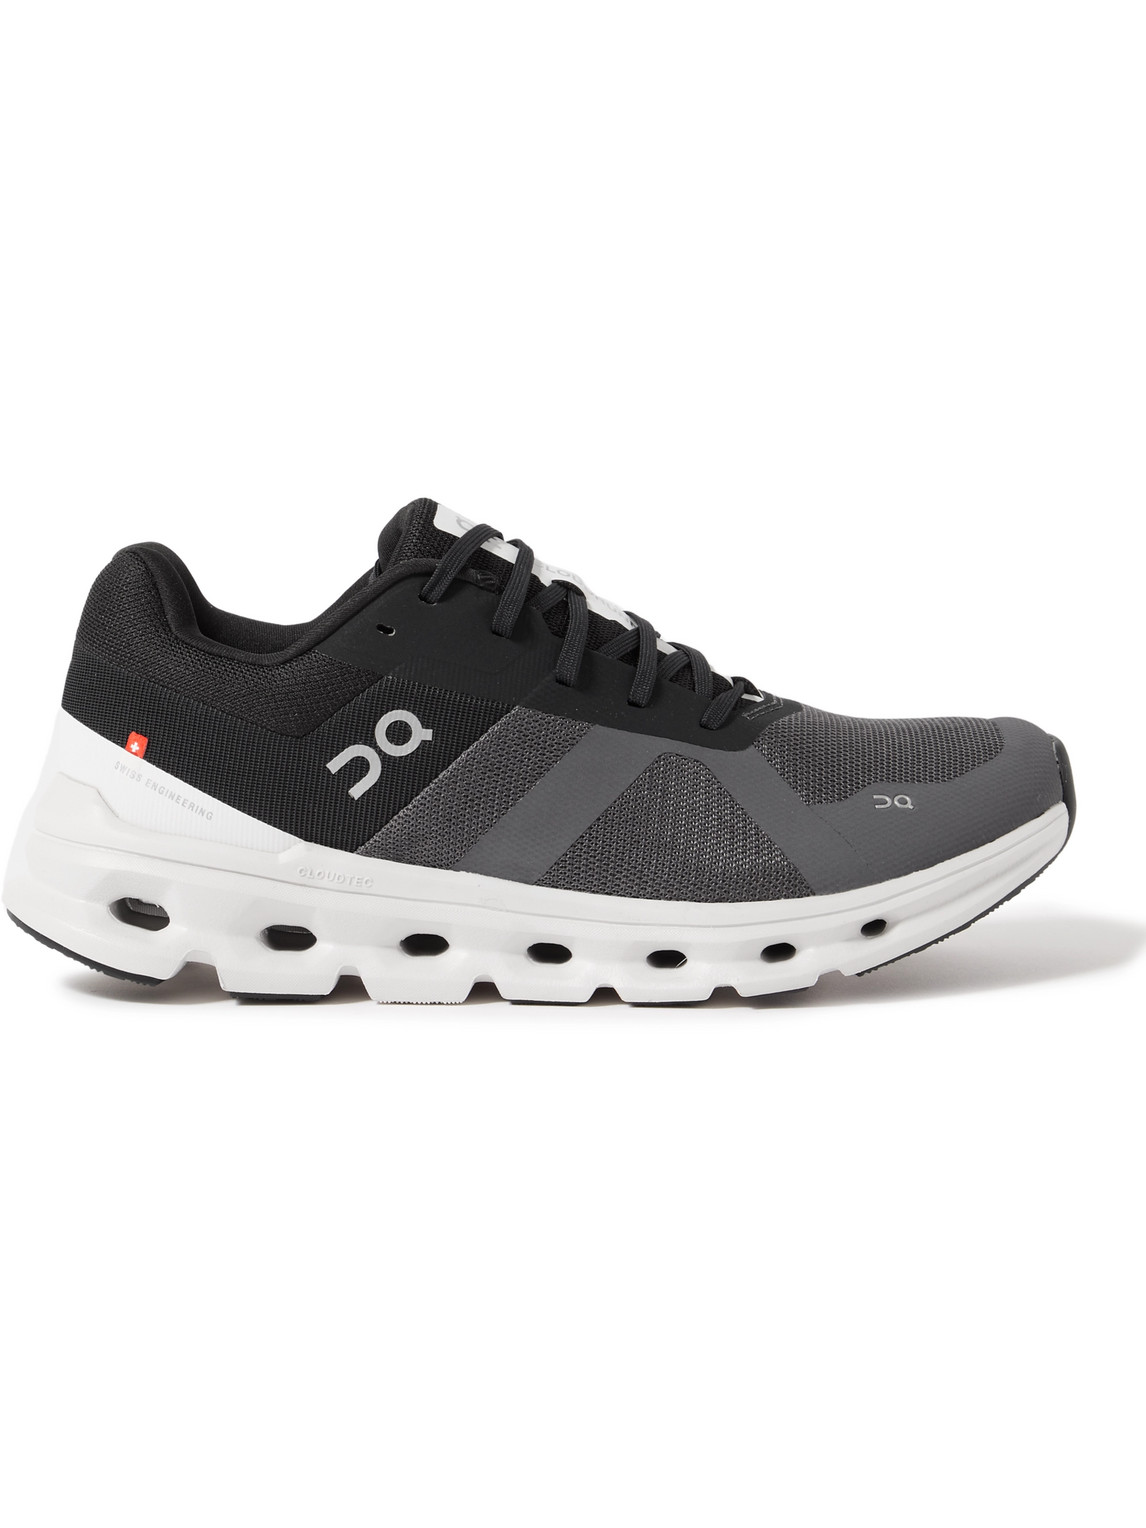 On Gray & Black Cloudrunner Sneakers